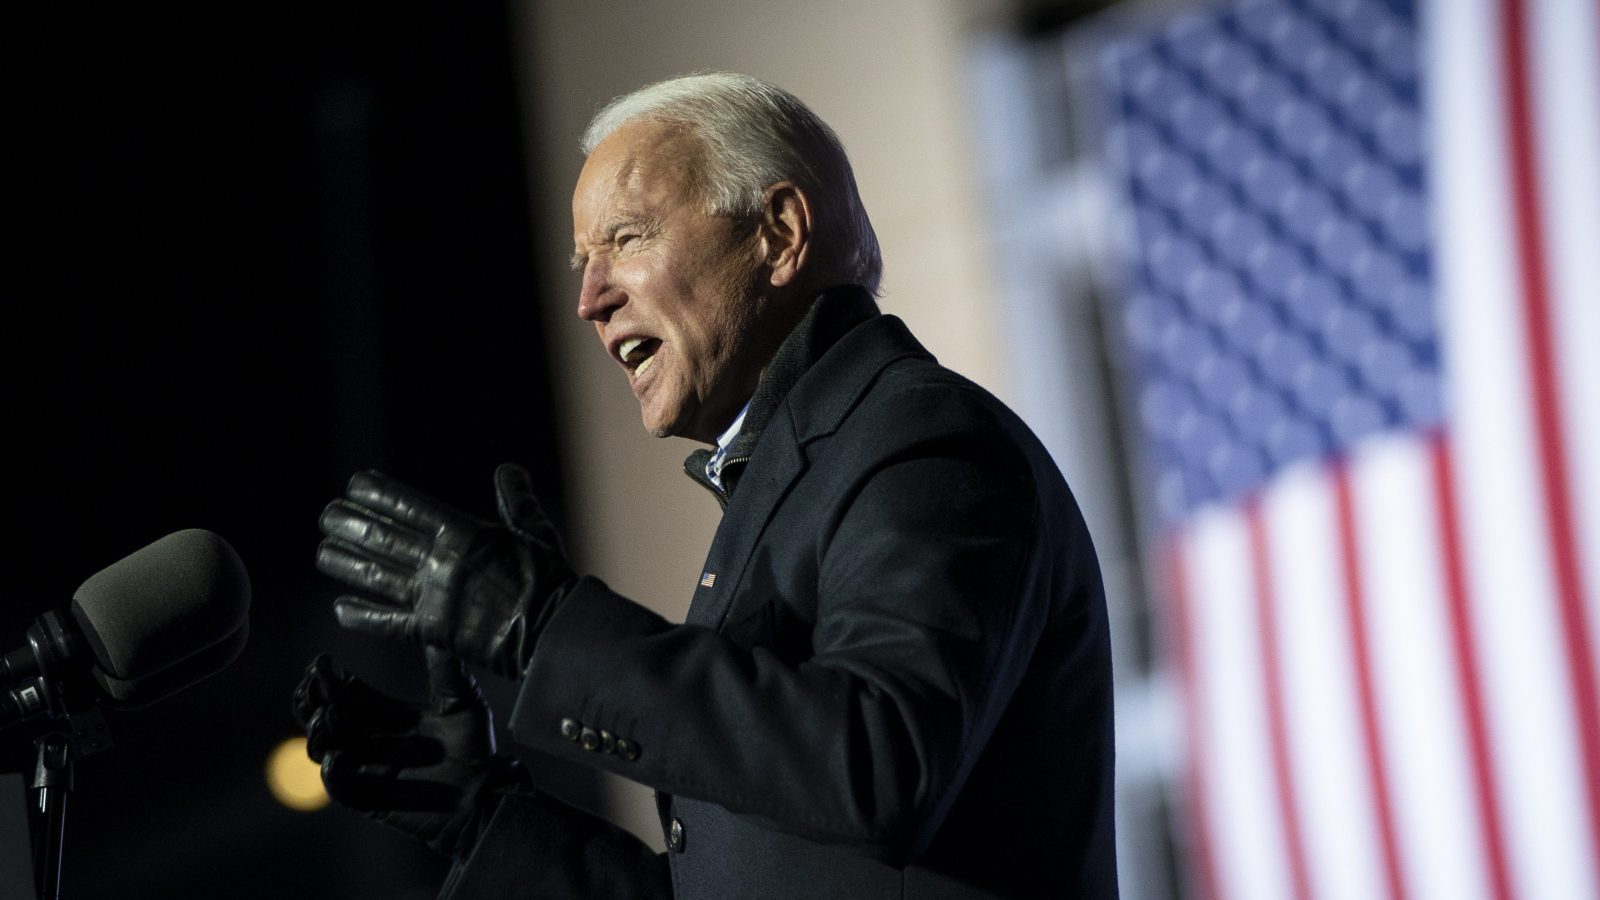 A photo of Joe Biden at a podium speaking. He is wearing a dark coat and dark gloves.